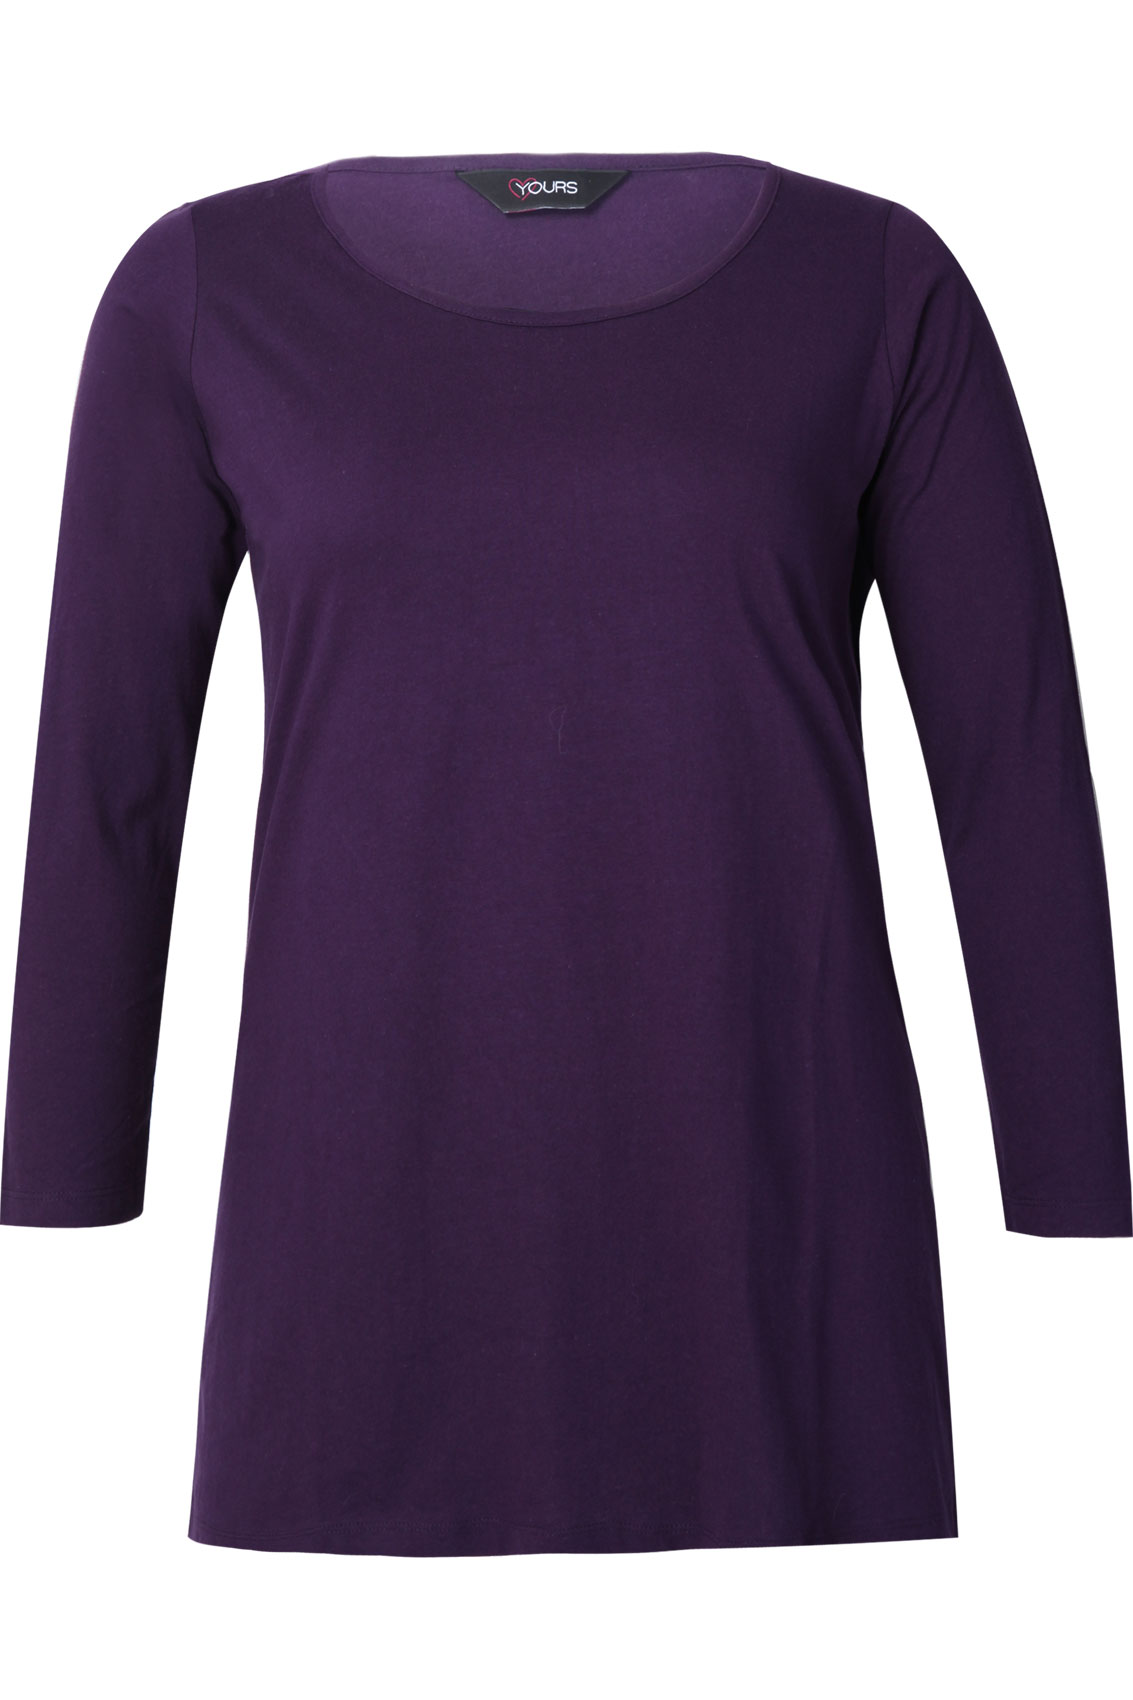 Purple Long Sleeve Scoop Neck T Shirt Plus Size 16 18 20 22 24 26 28 30 32